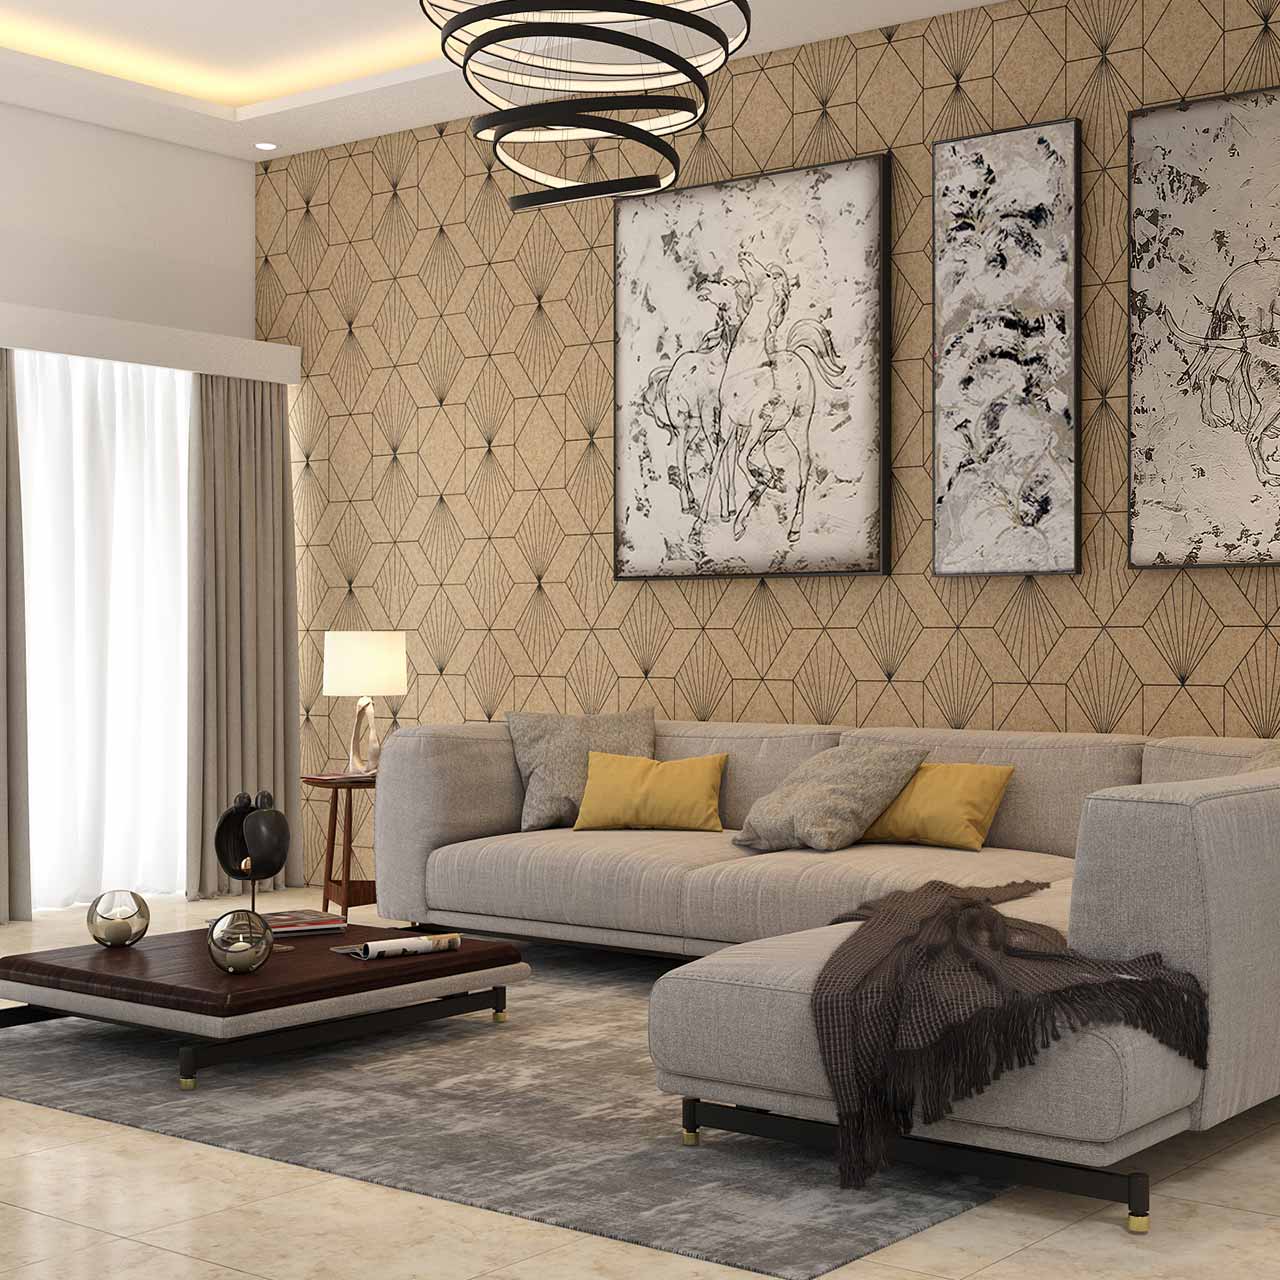 Basics of designing your living room interiors